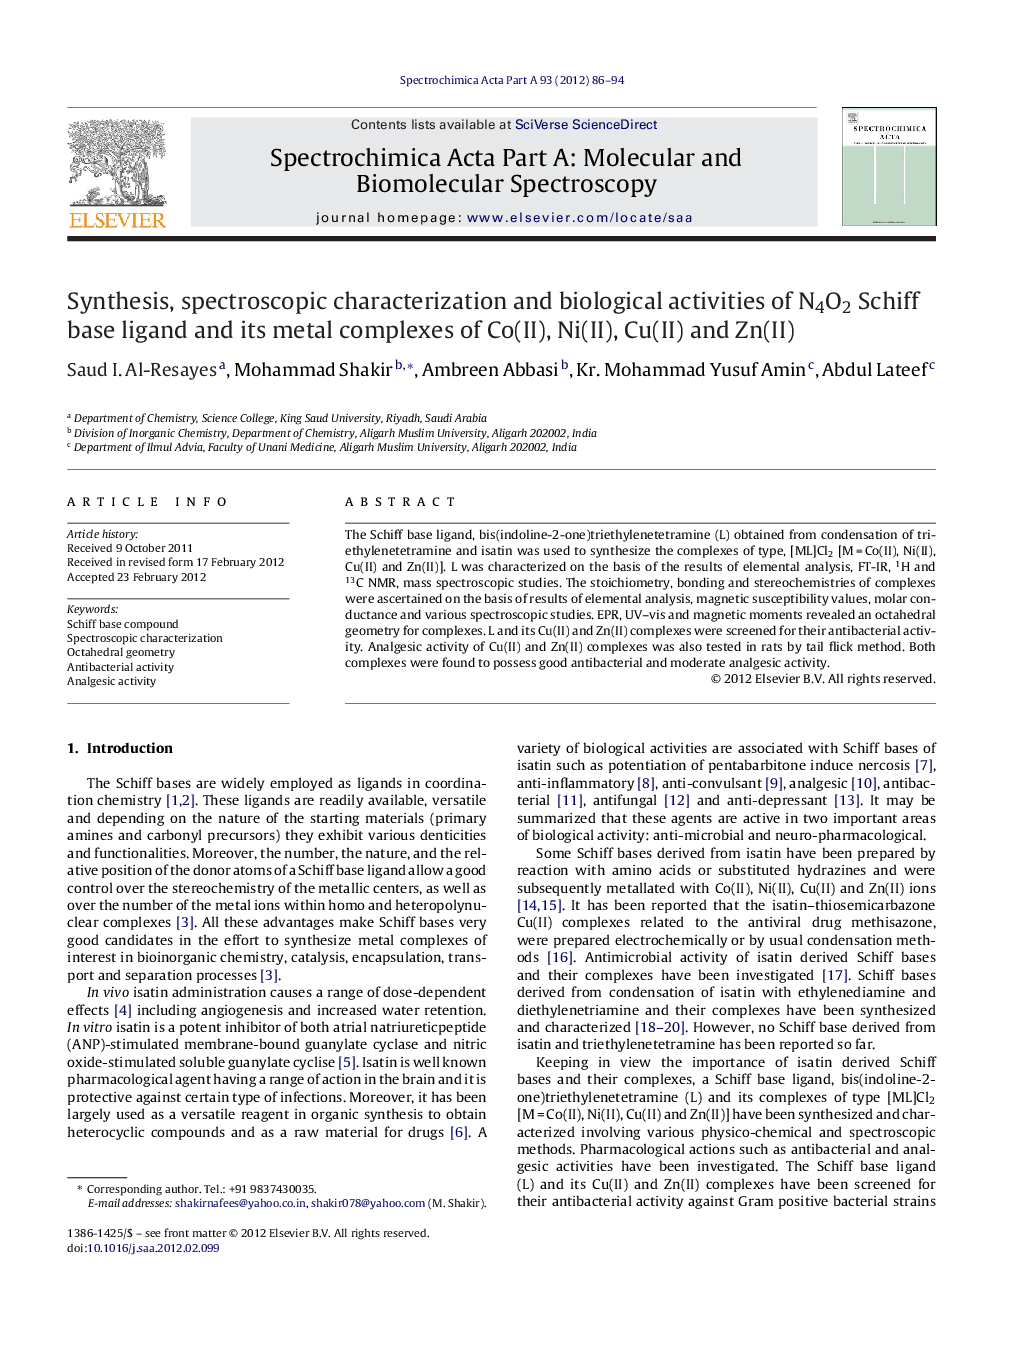 Synthesis, spectroscopic characterization and biological activities of N4O2 Schiff base ligand and its metal complexes of Co(II), Ni(II), Cu(II) and Zn(II)